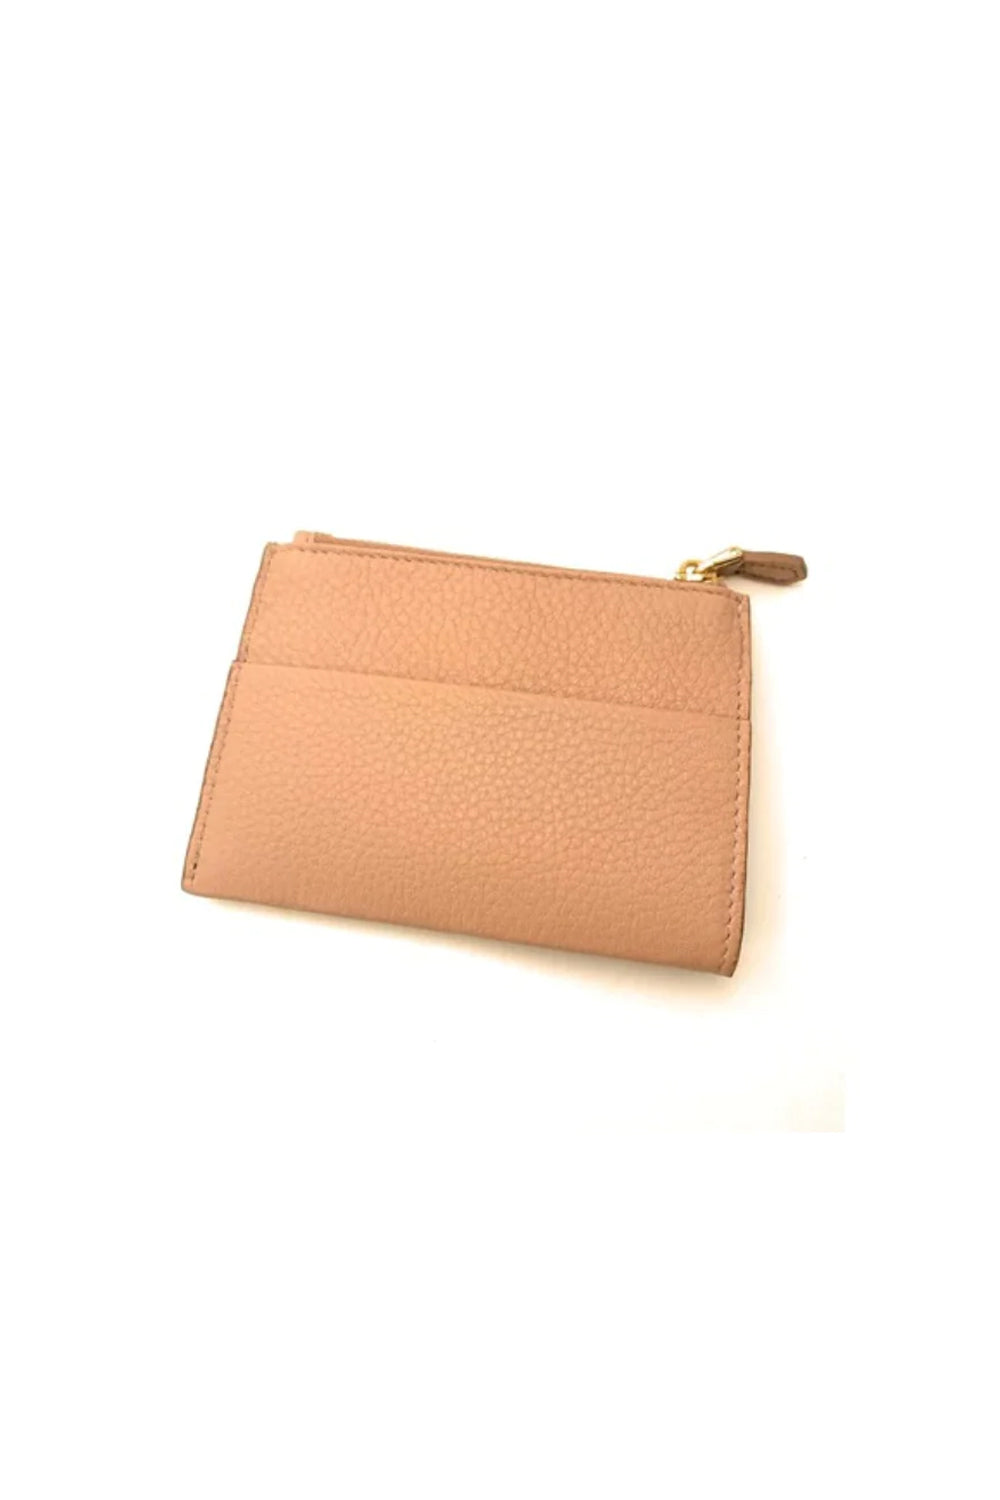 Prada Womens Vitello Grain Leather Zip Wallet